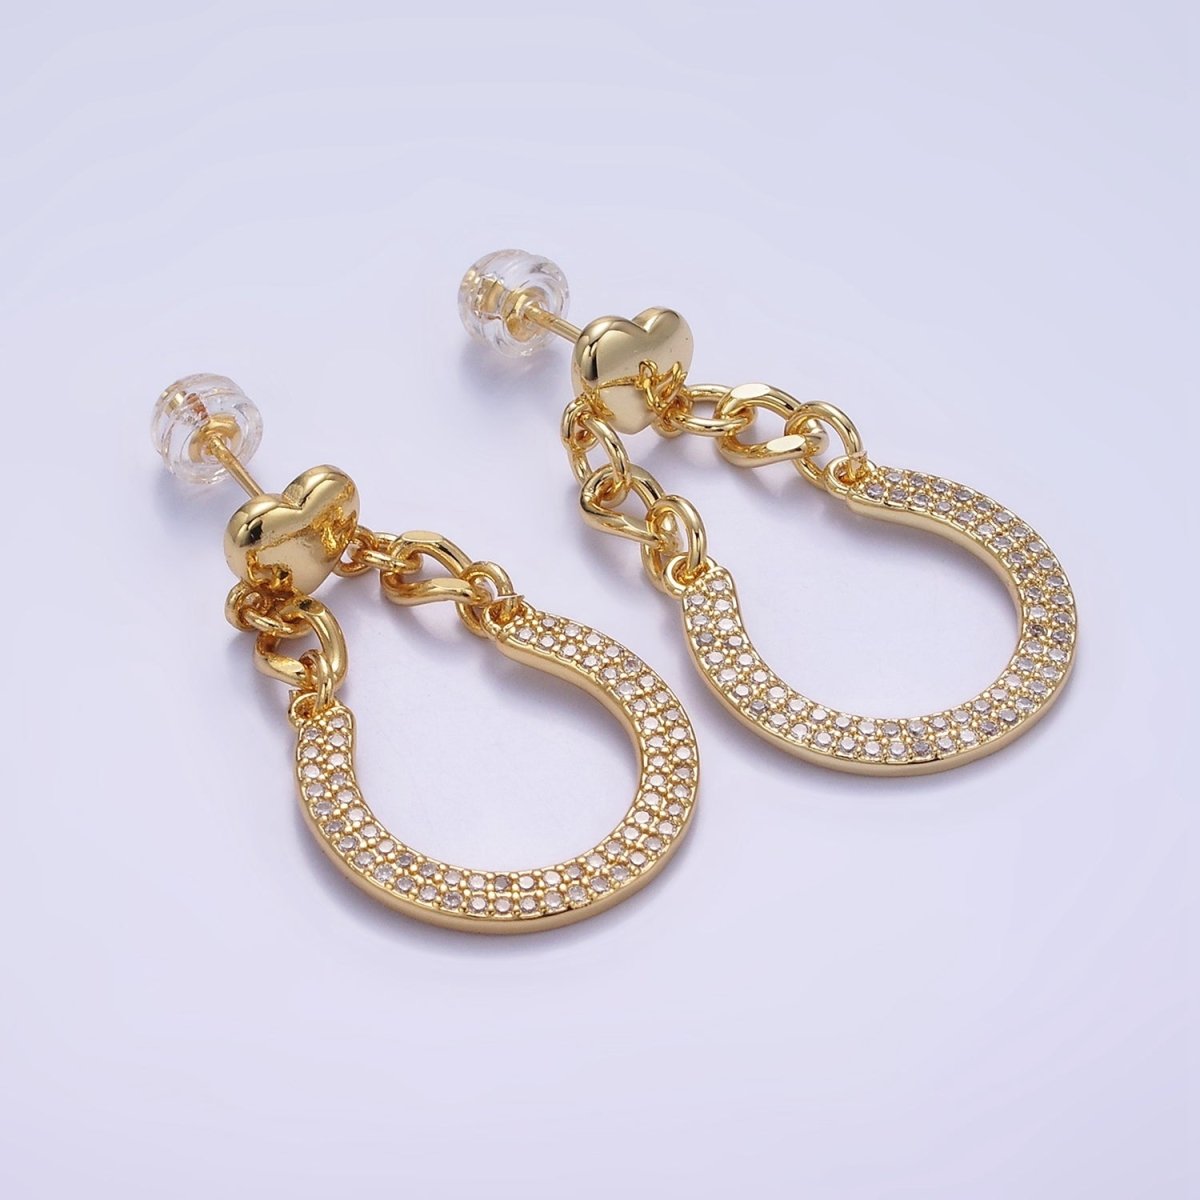 Big Horseshoe Stud Earring in 14k Gold Filled Equestrian Jewelry | AE483 - DLUXCA